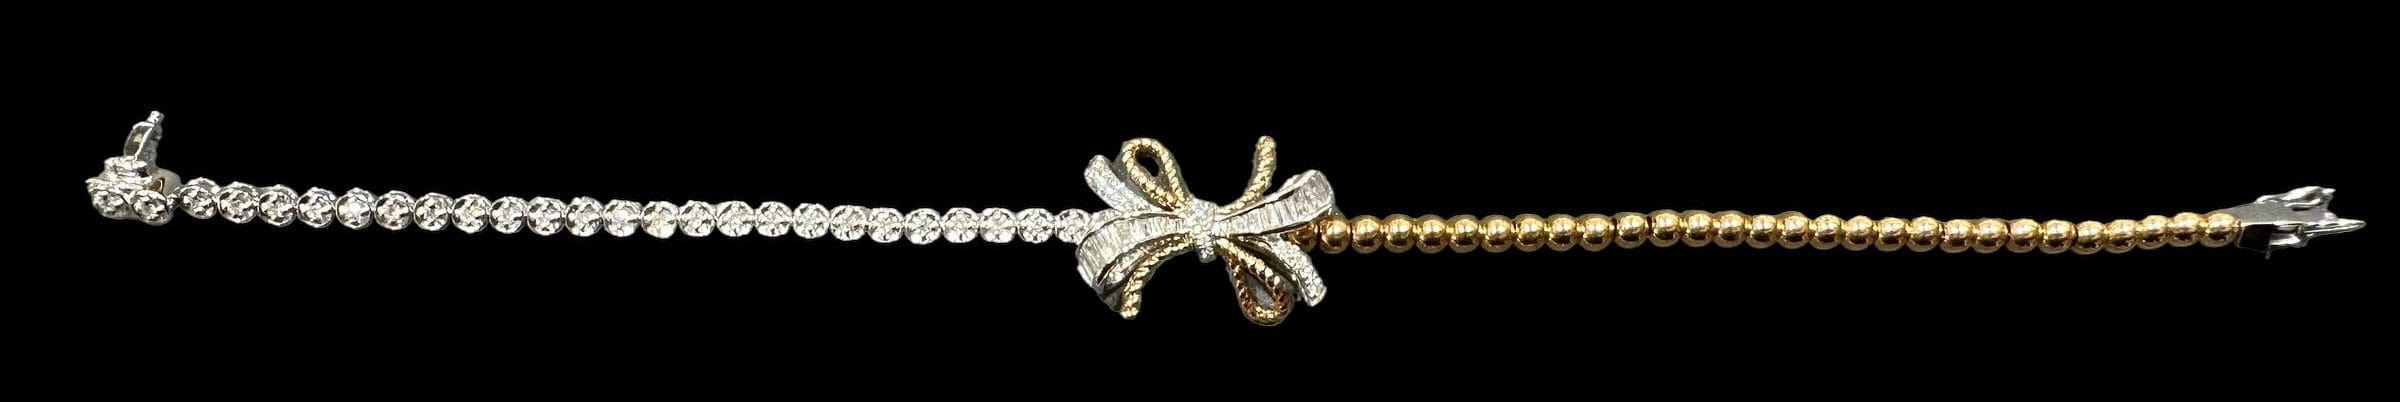 GX White & yellow Gold diamond centre bow bracelet